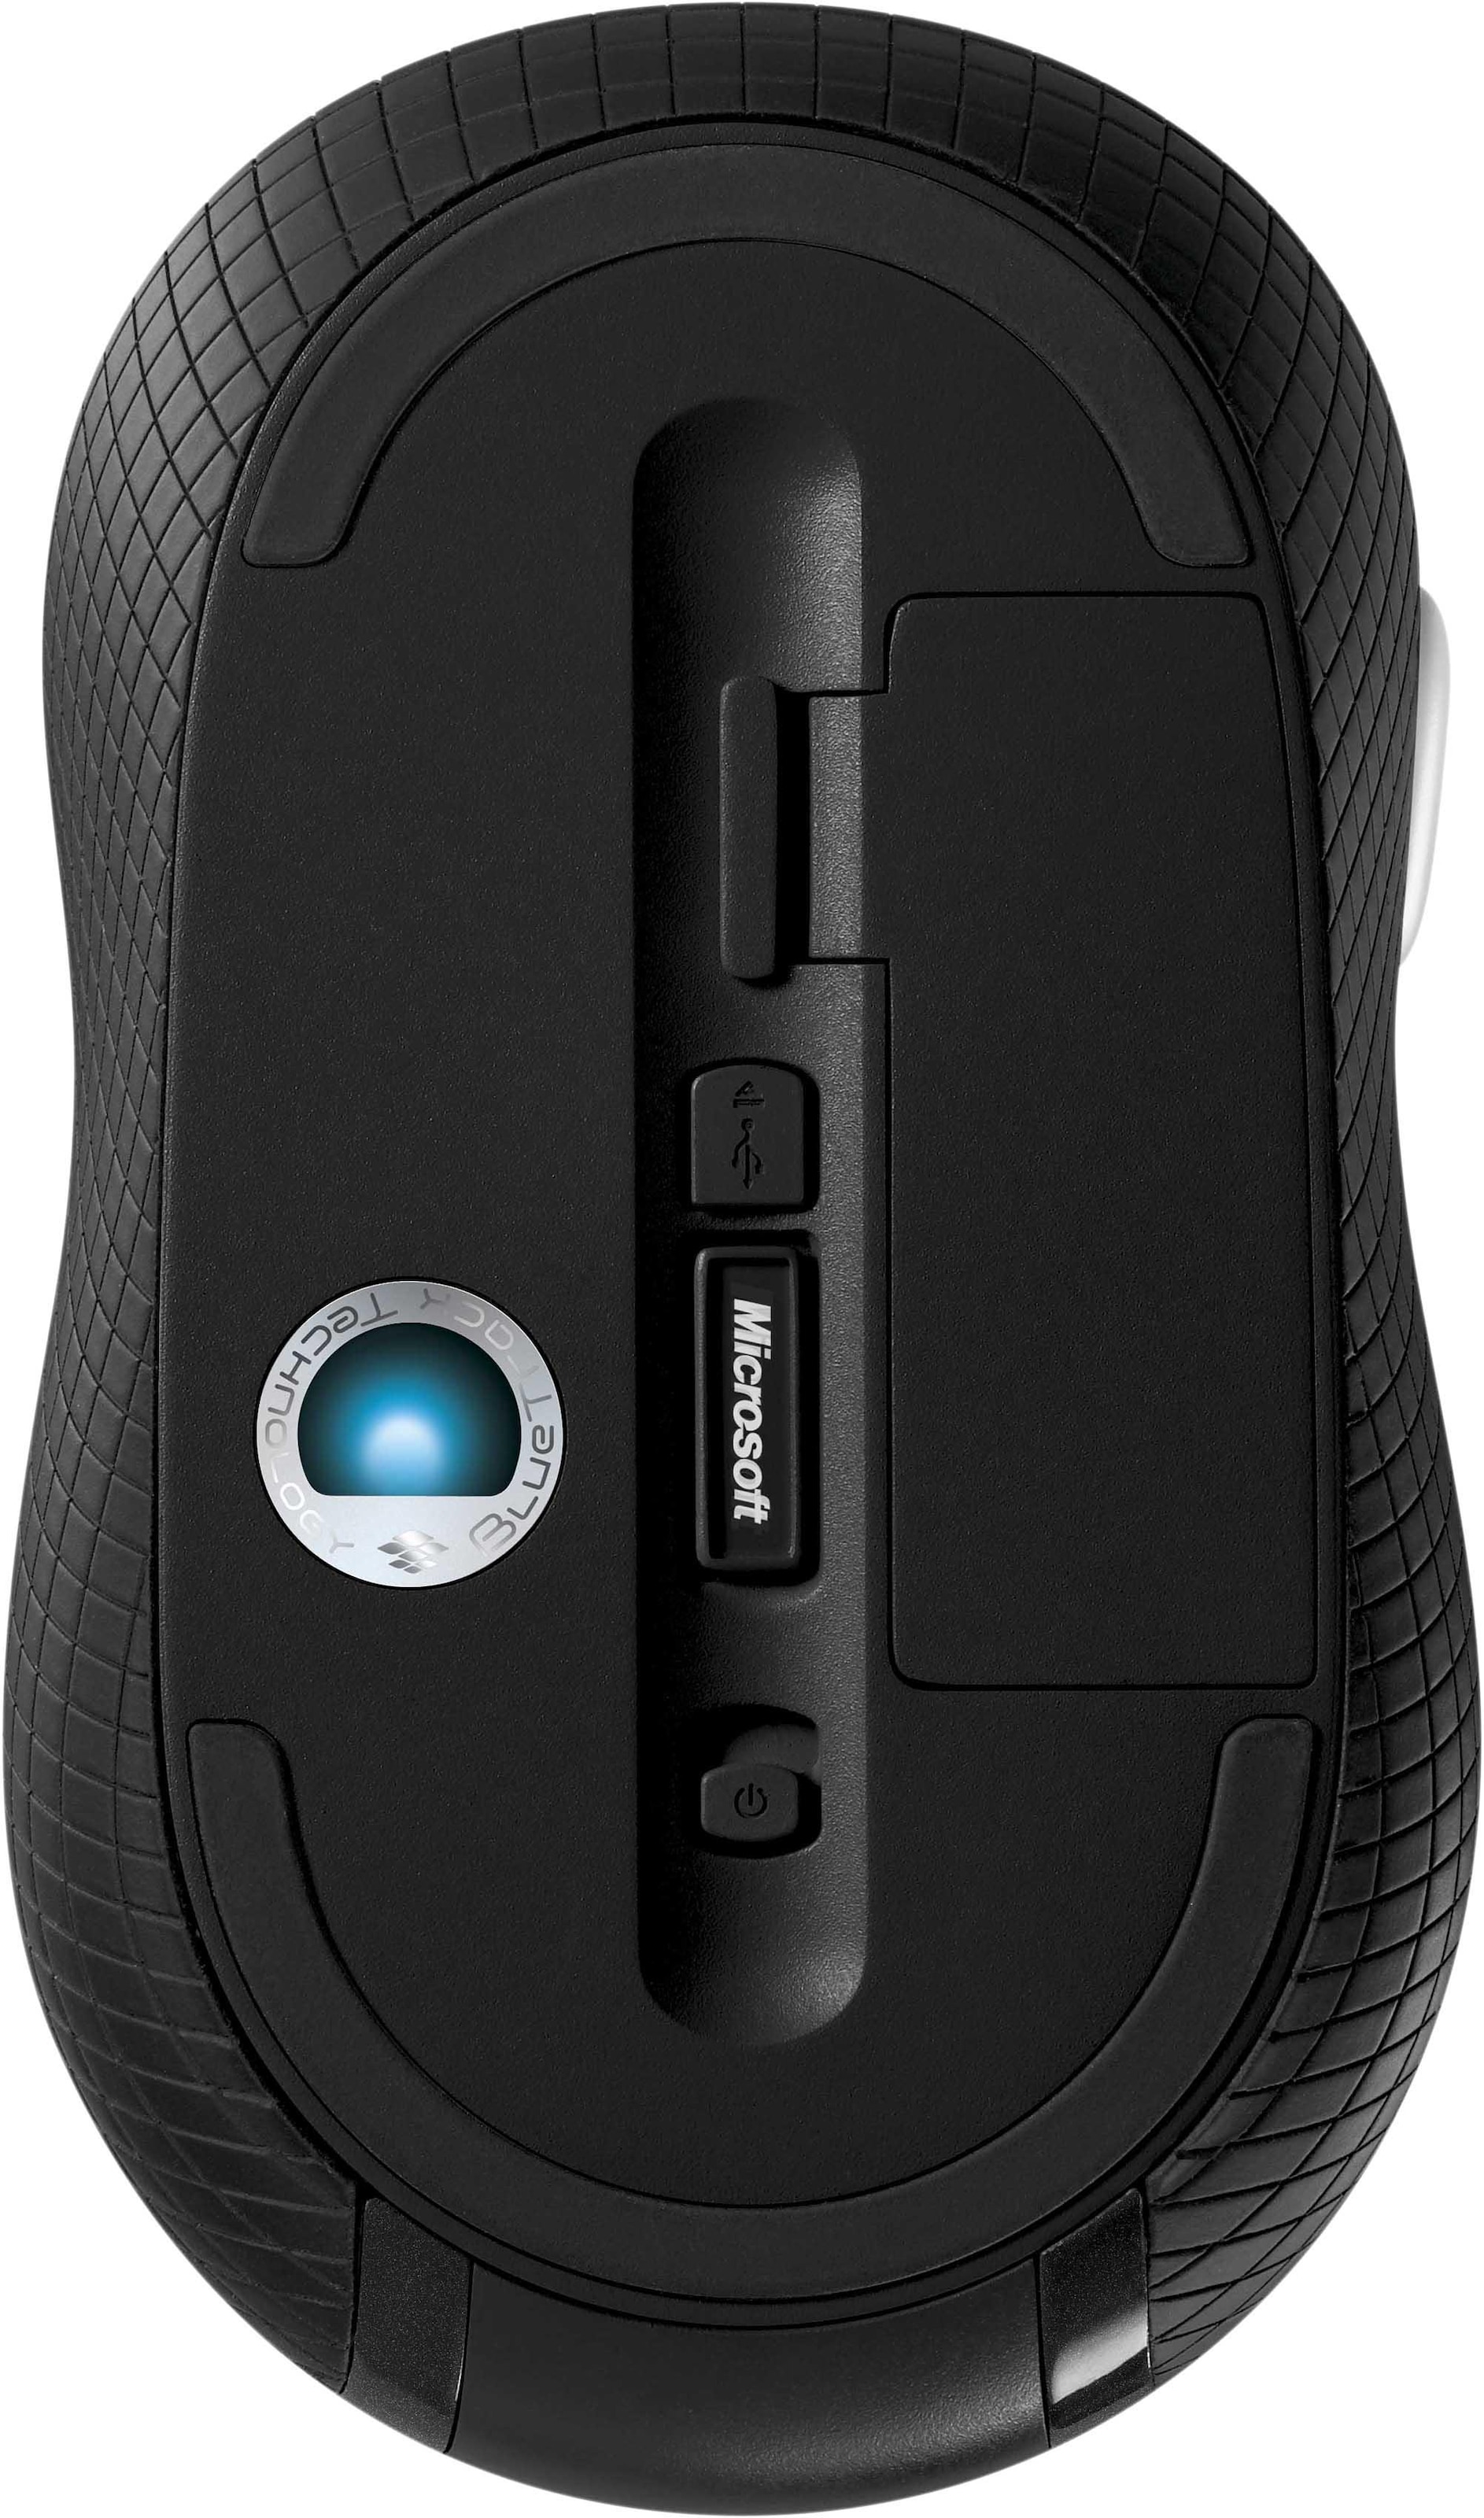 Microsoft Maus »Wireless Mobile 4000«, Funk